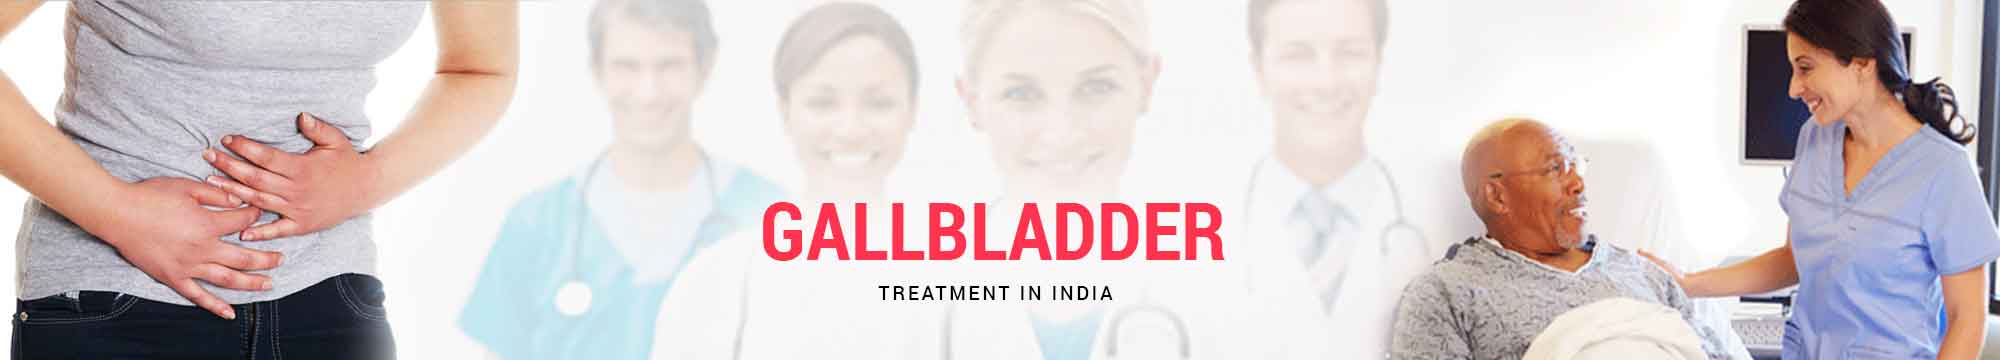 Gallbladder Cancer Treatment in India